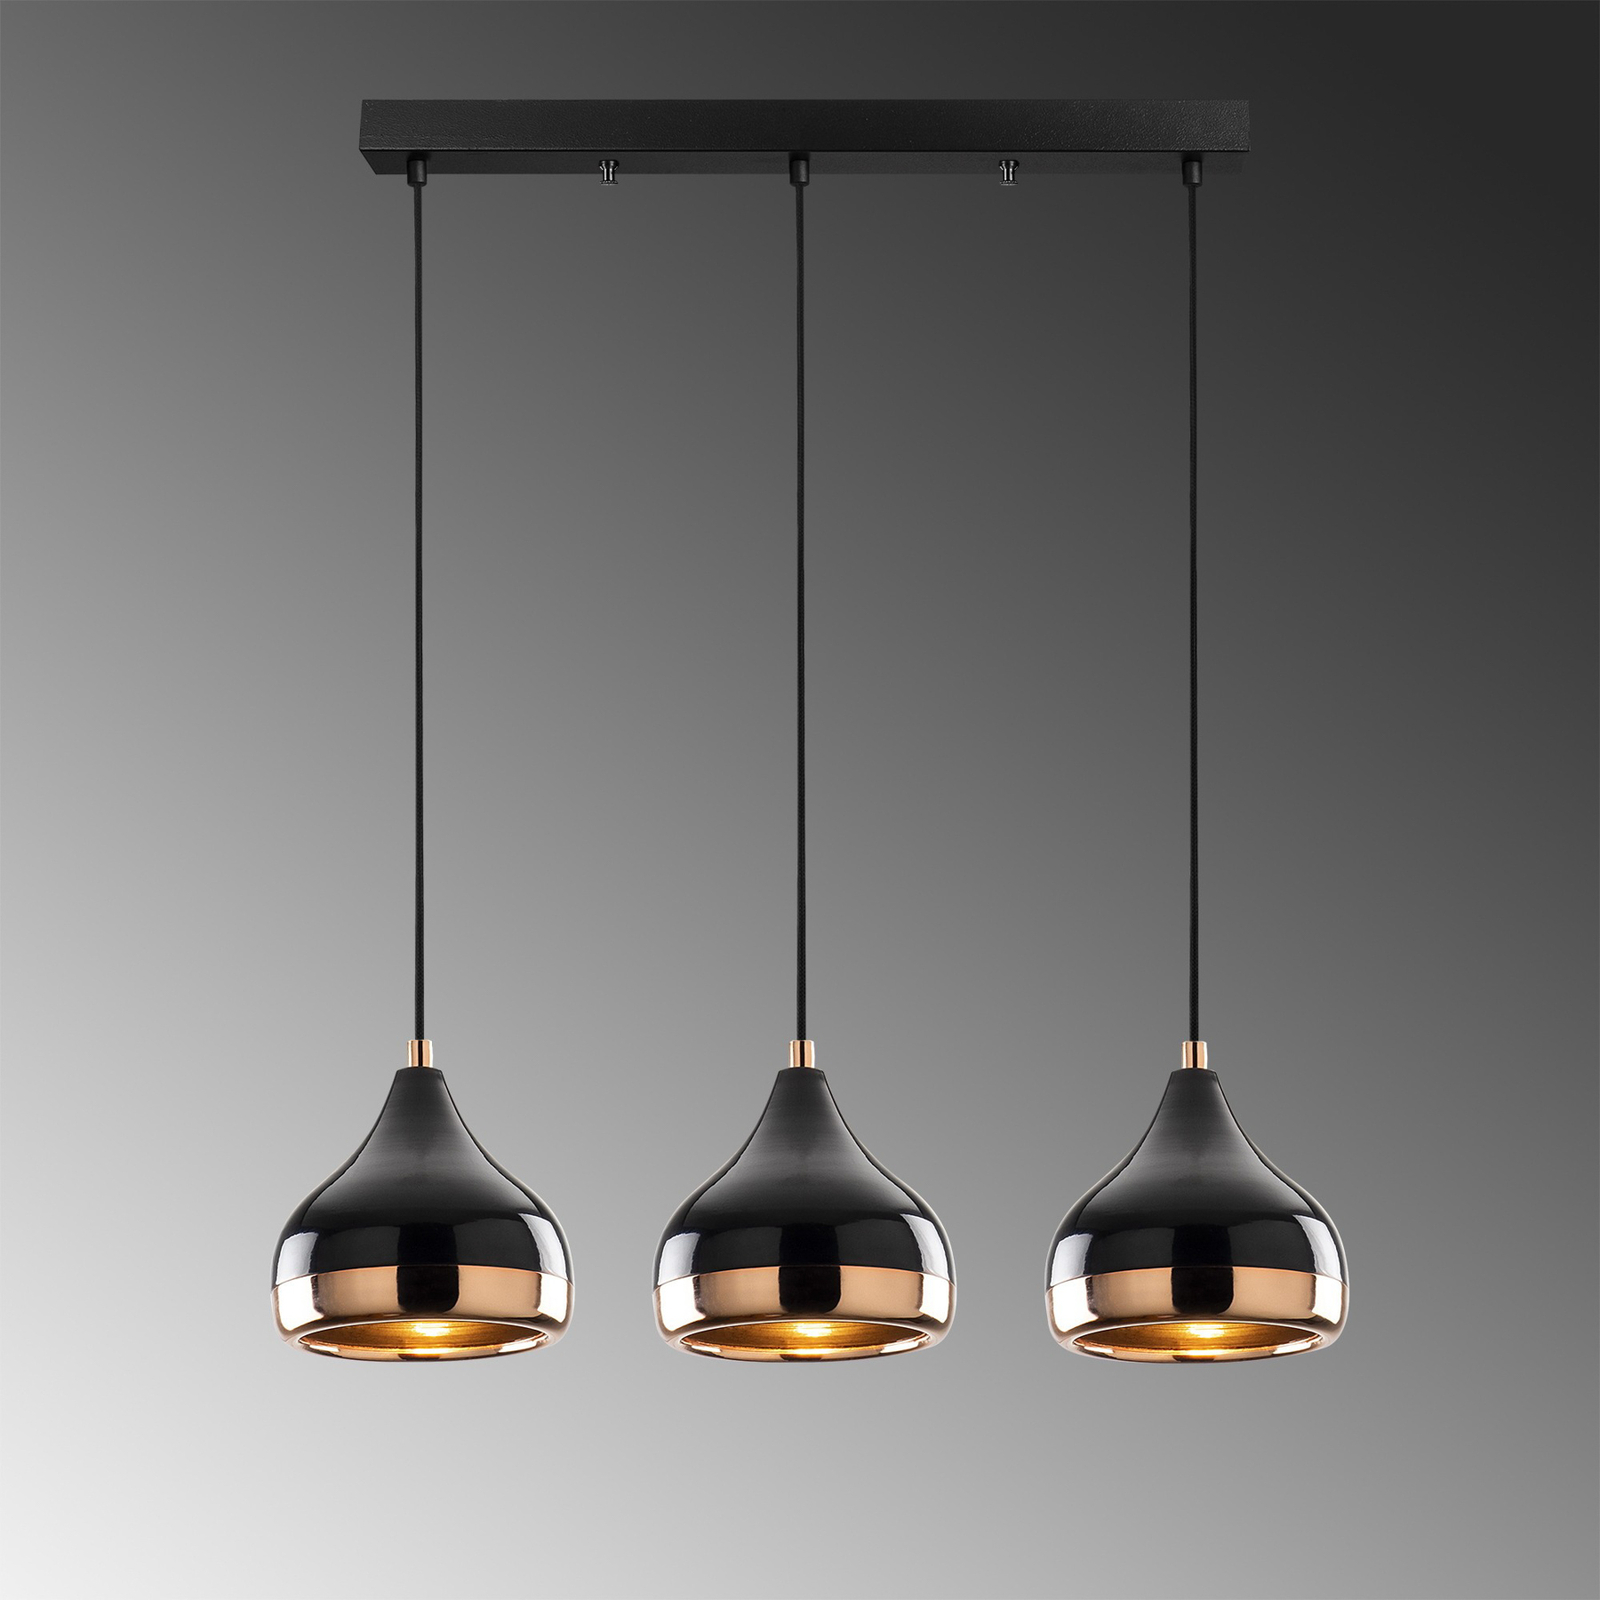 Hanglamp Yildo 6877 3-lamps lineair zwart/koper